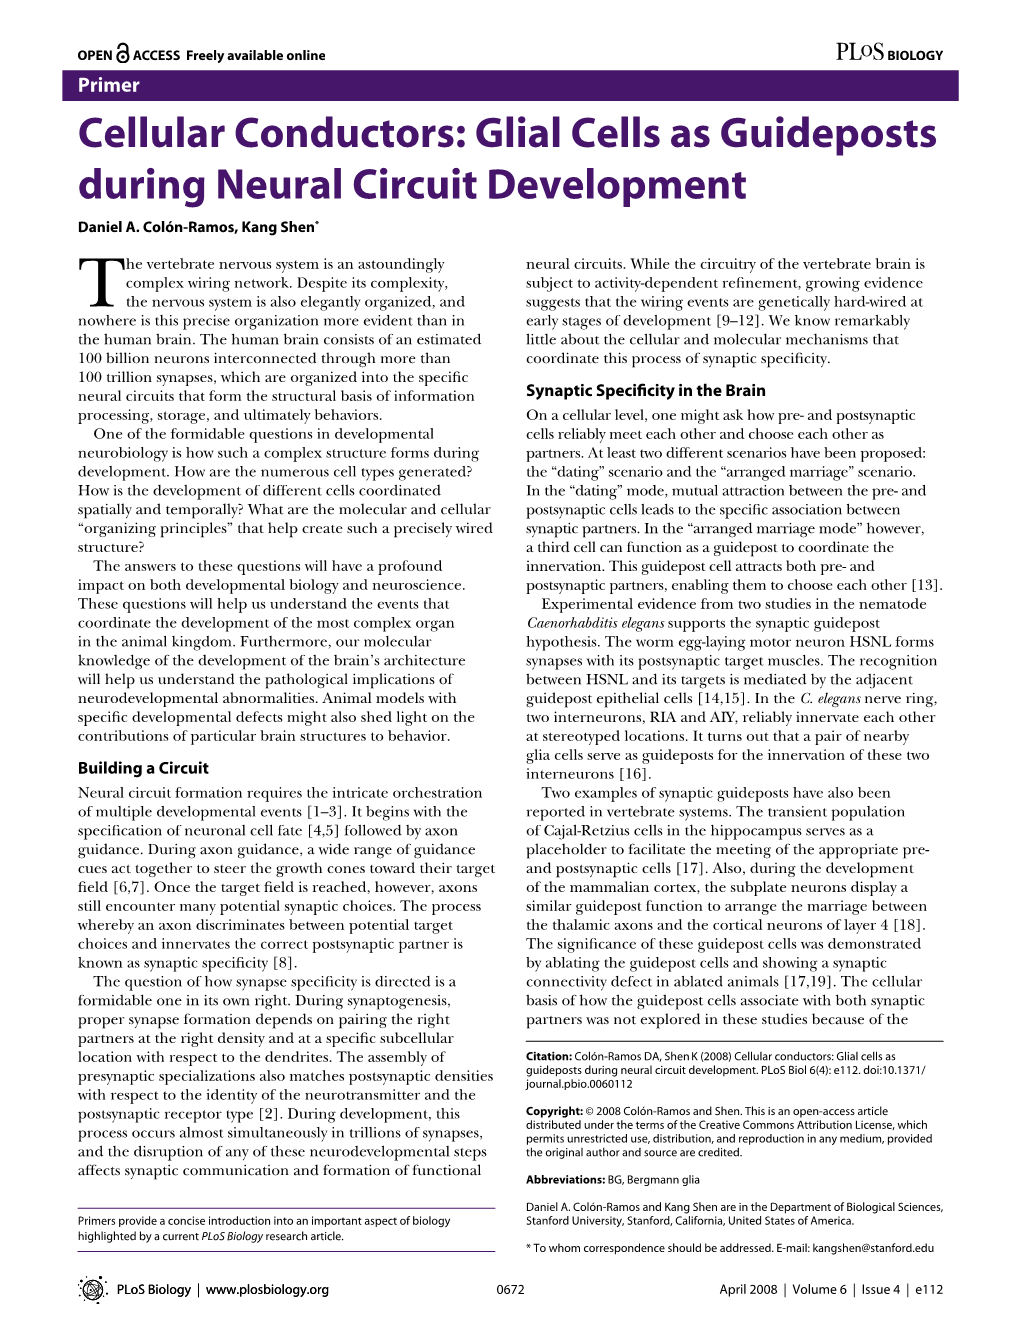 Glial Cells As Guideposts During Neural Circuit Development Daniel A